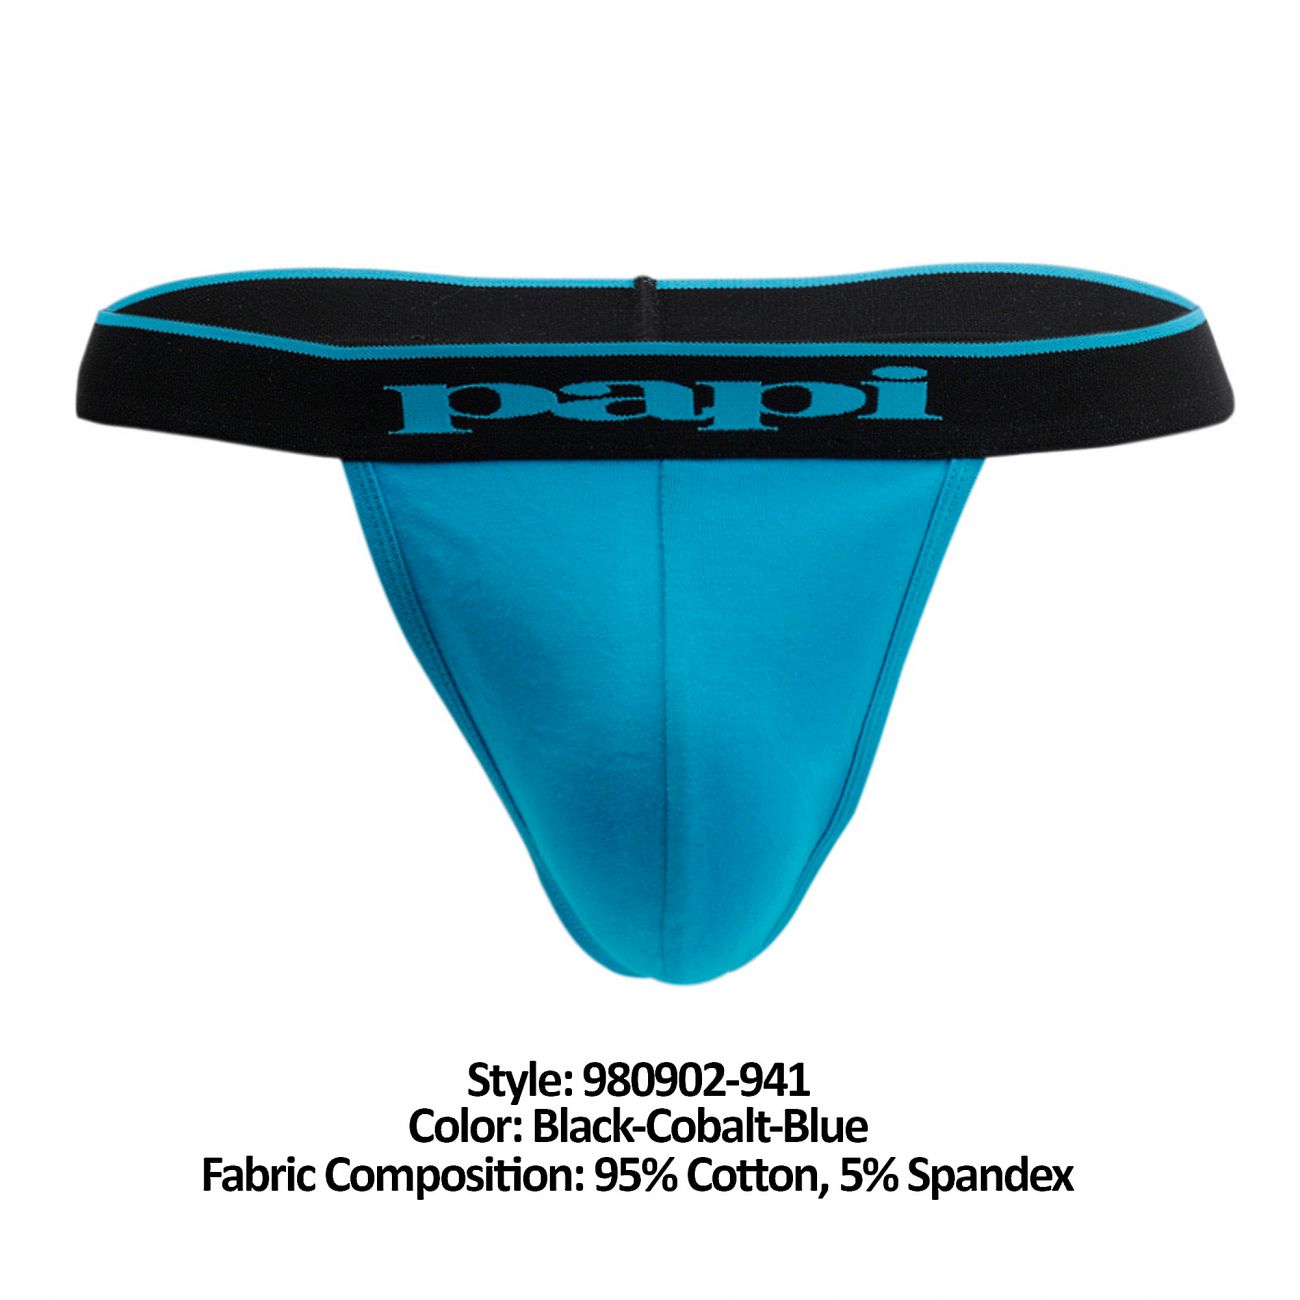 Papi Men's Fashion Underwear Thongs for Men | eBay